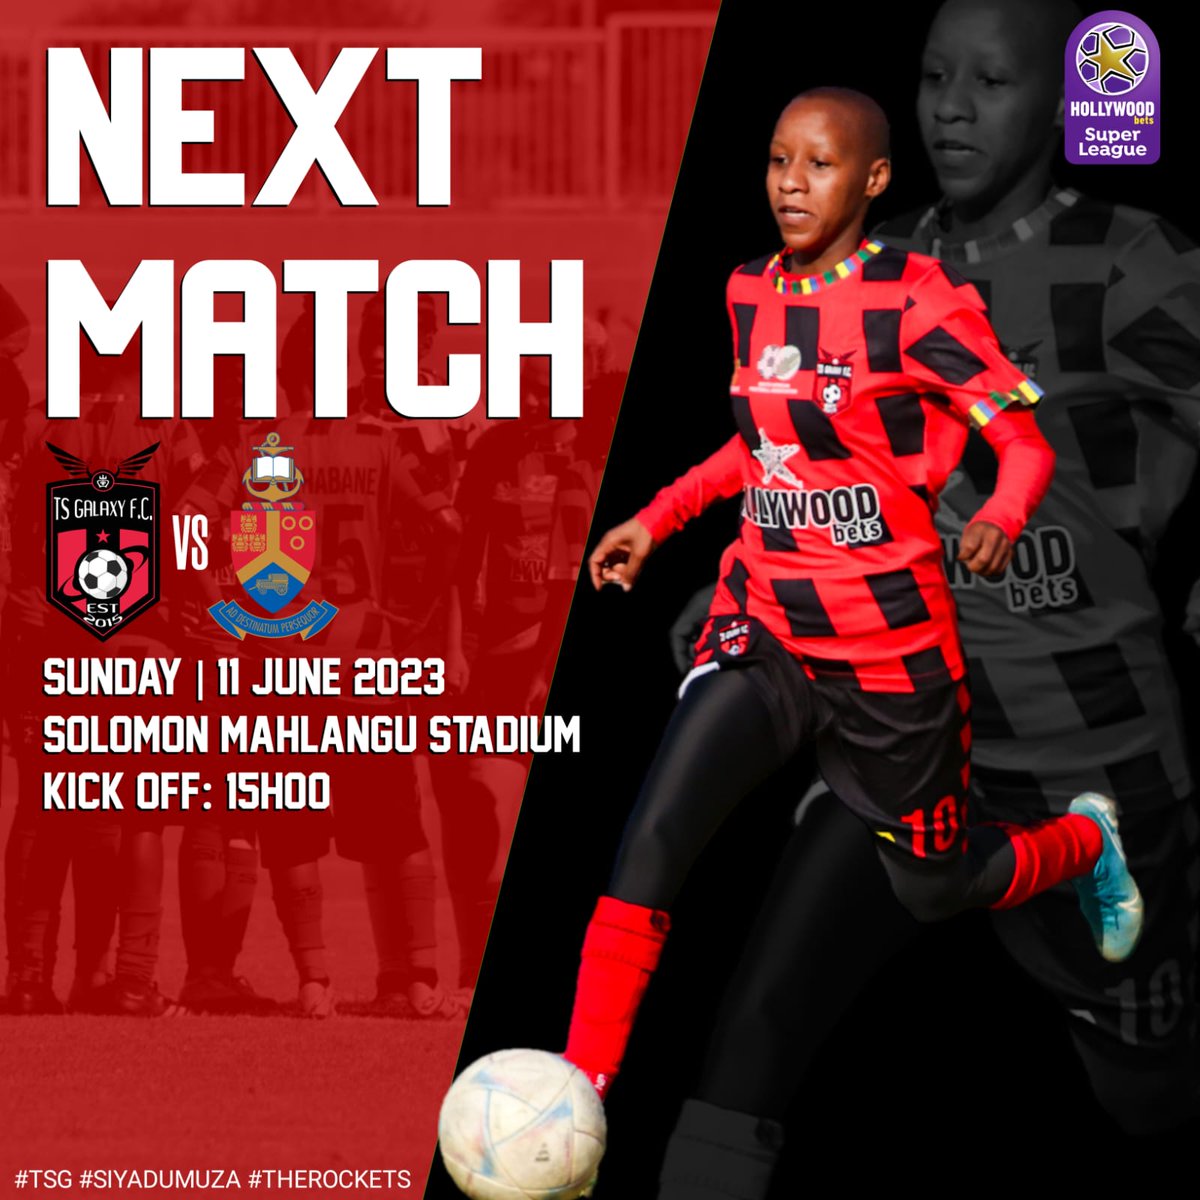 🚨 Next match! 🚨

TS Galaxy Queens VS University of Pretoria Ladies 

🗓 Date: 11 June 2023
🕛Time: 15h00
🏟Venue: Solomon Mahlangu Stadium 

#Siyadumuza 
#TheRockets 
#TSG 
#WeAreHereToStay